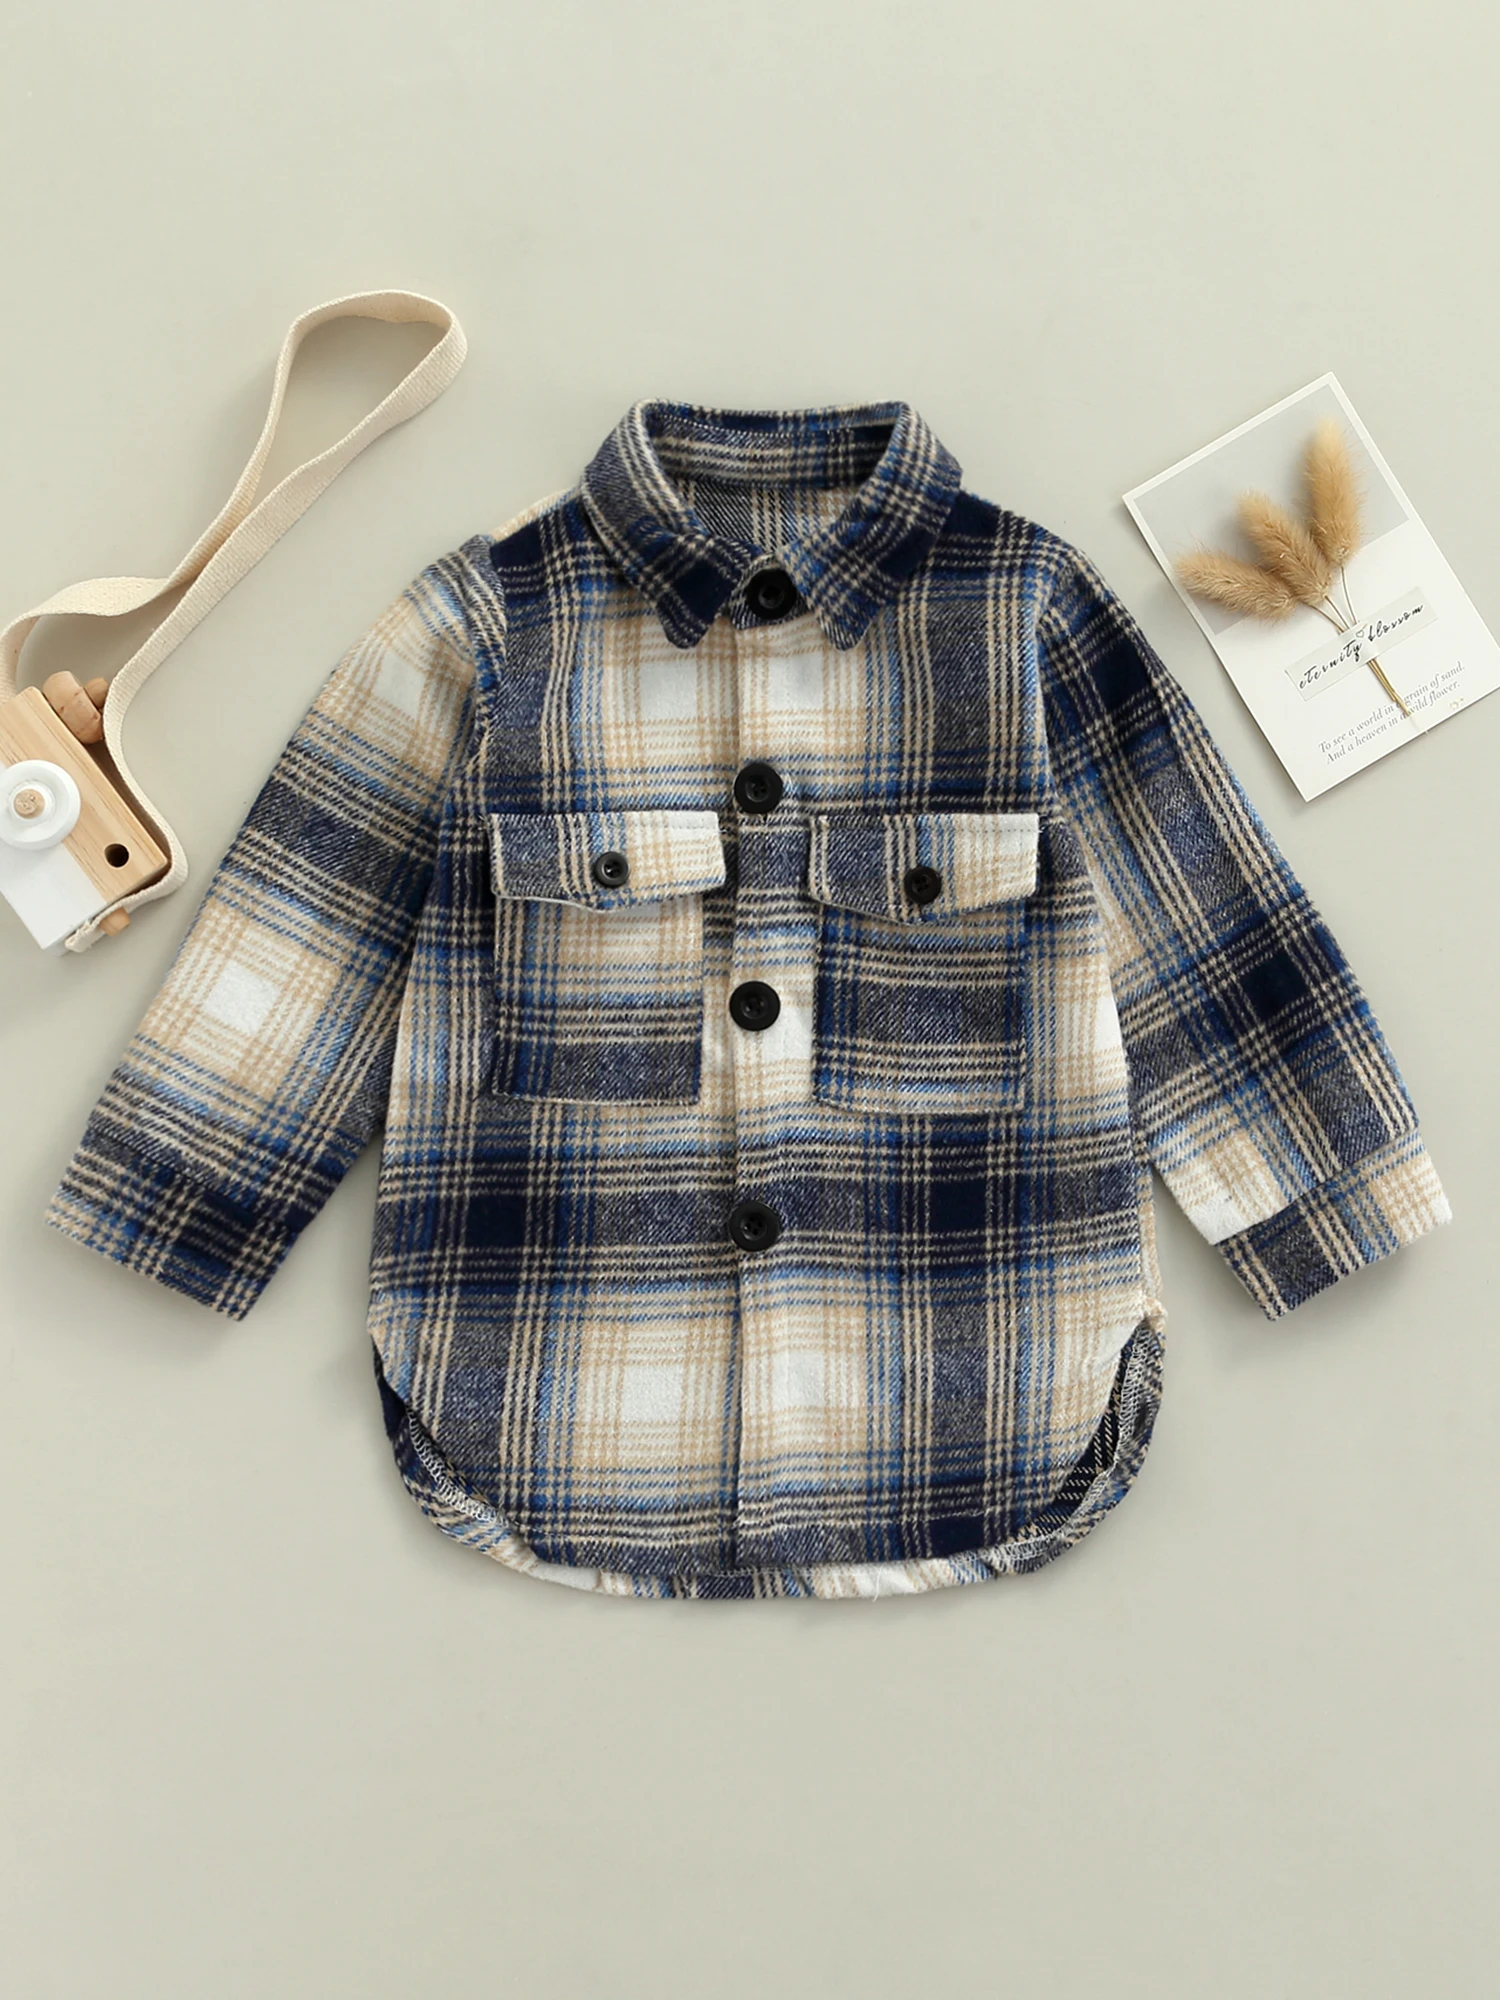 

Unisex Children Plaid Print Coat, Loose Fit Long Sleeve Lapel Neck Irregular Hem Shirt with Pockets 18M-6T